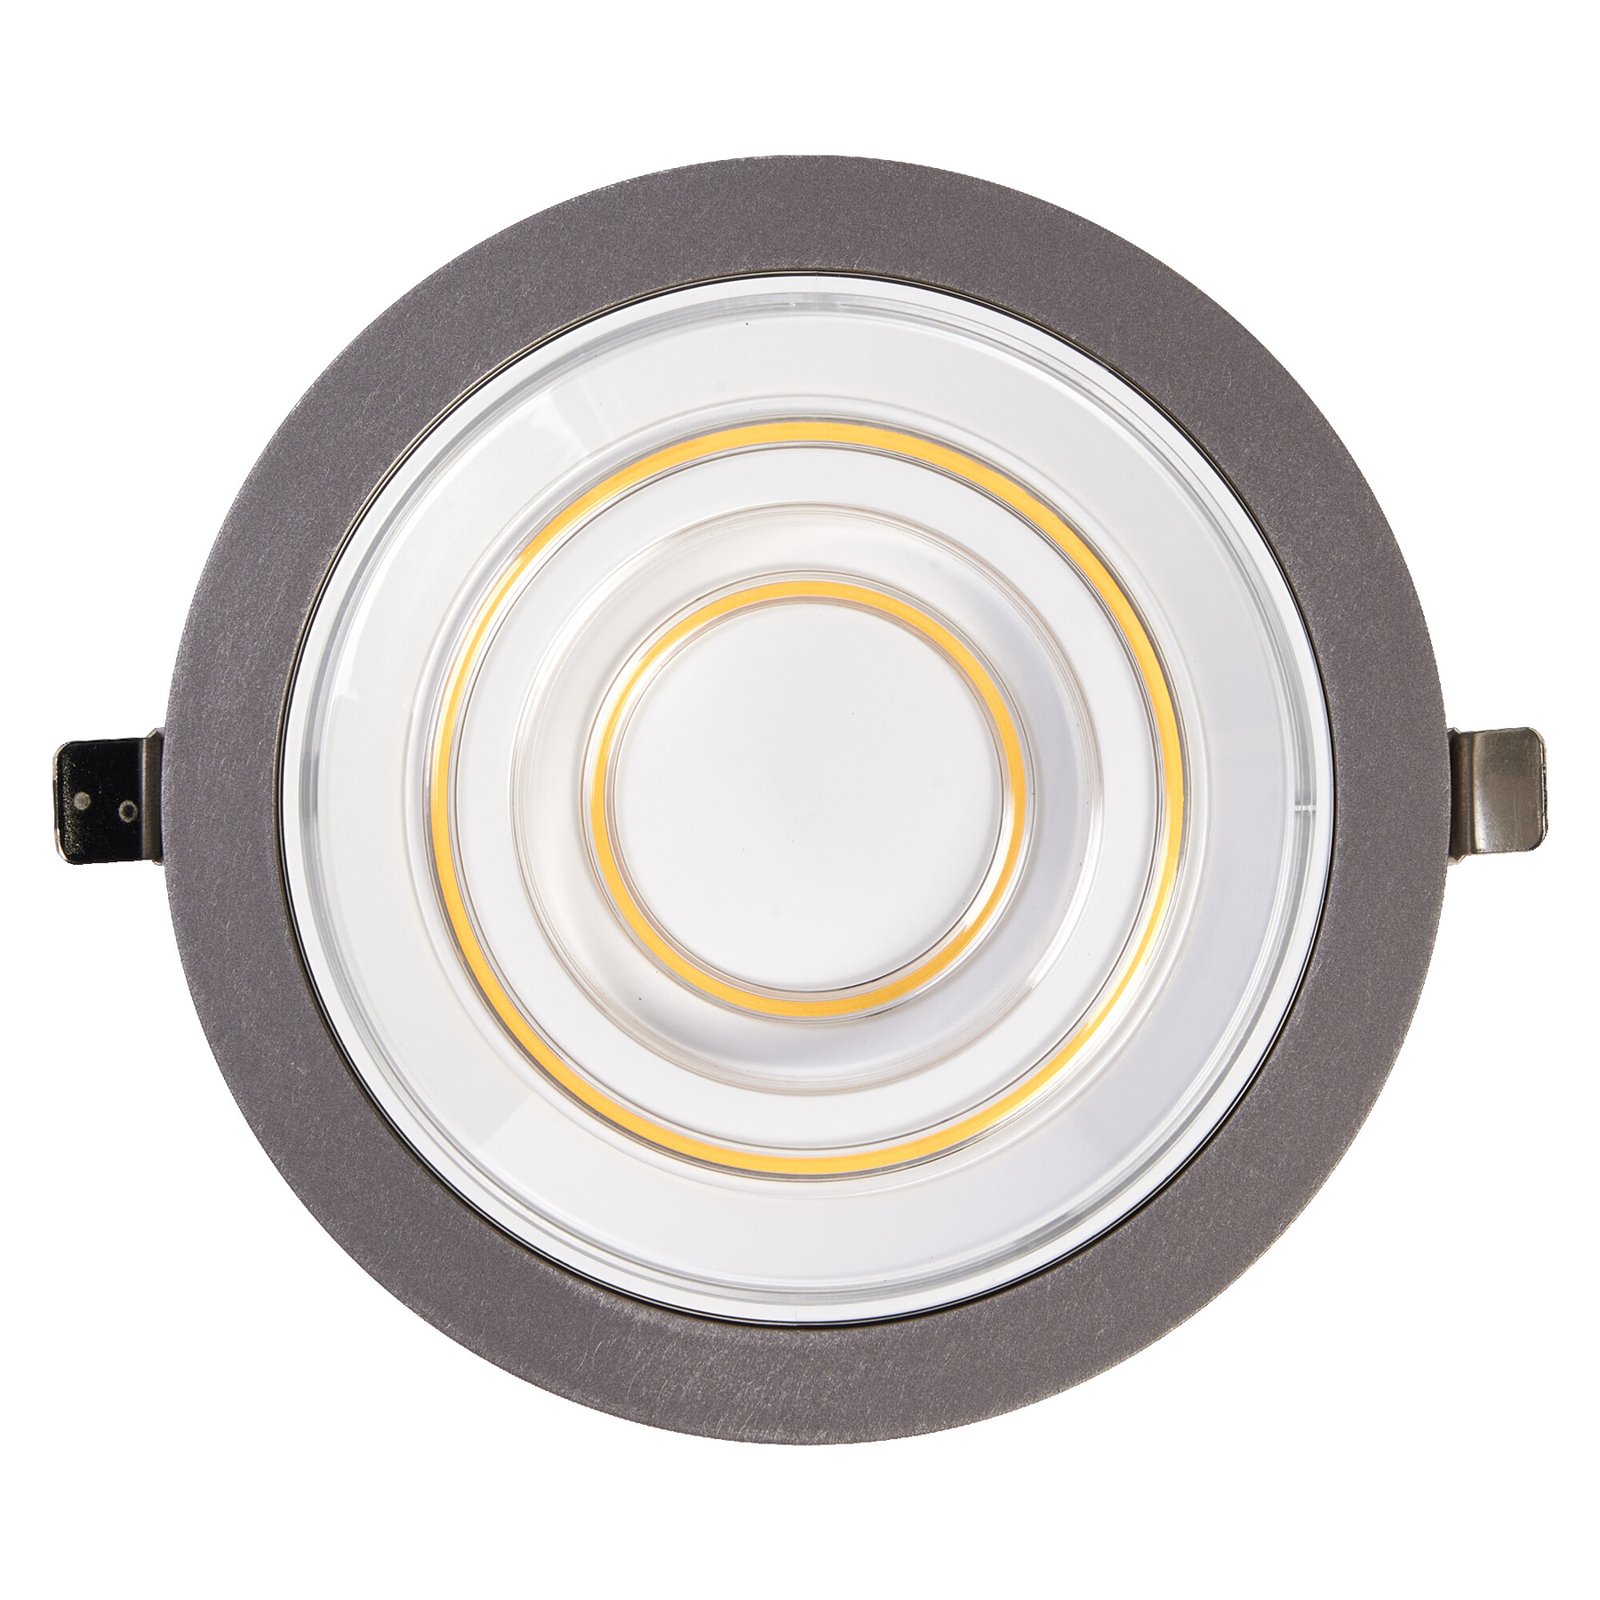 "Ledvance Decor" dekoratyvinis žibintas "Echo" LED šviestuvas